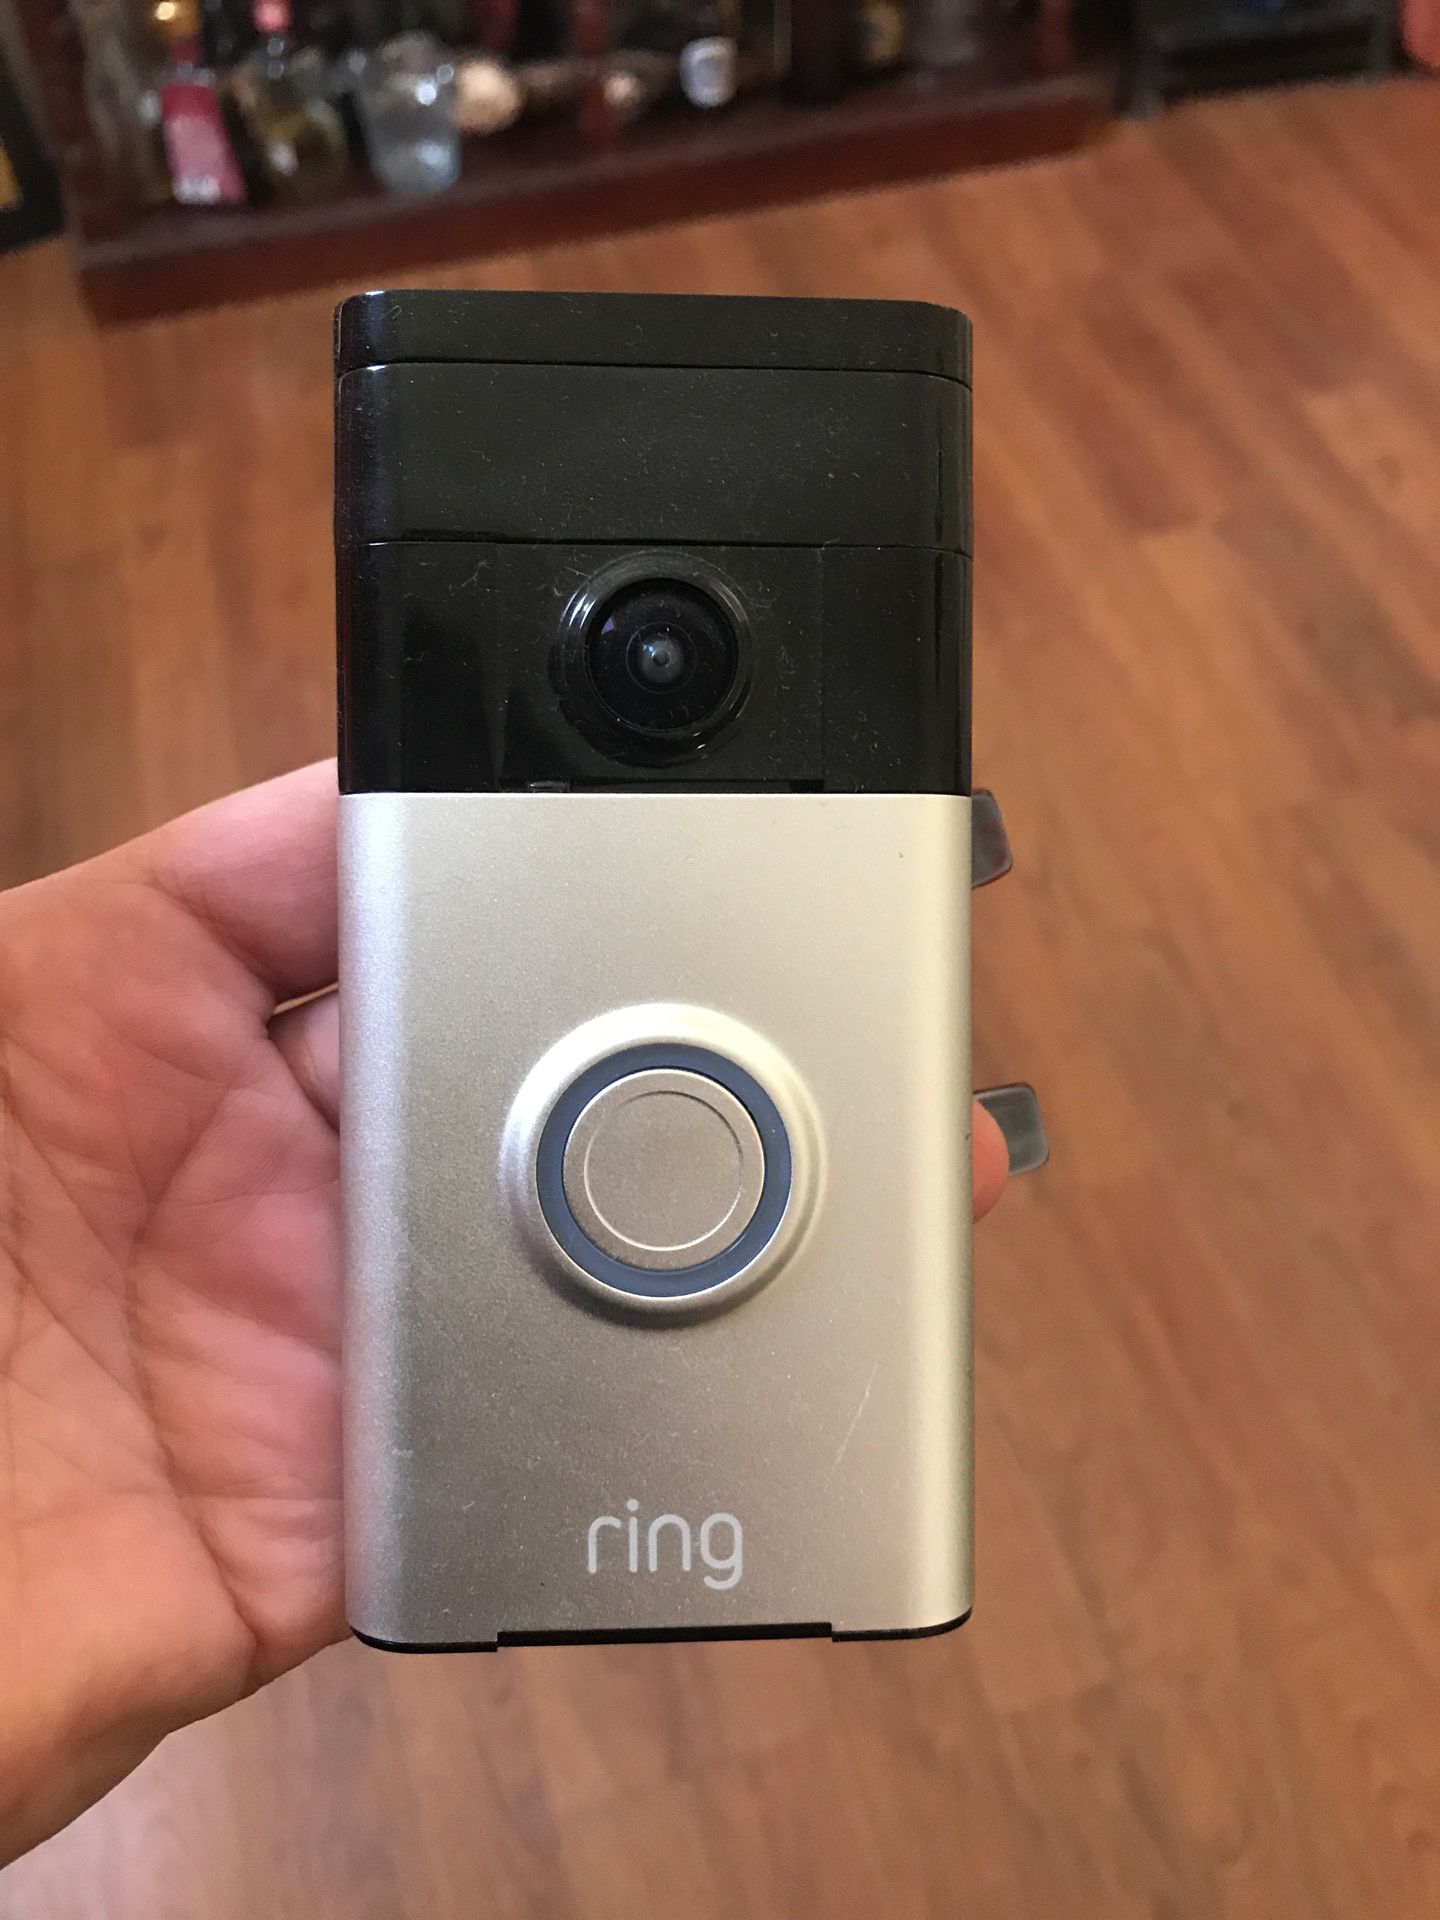 Ring doorbell security camera